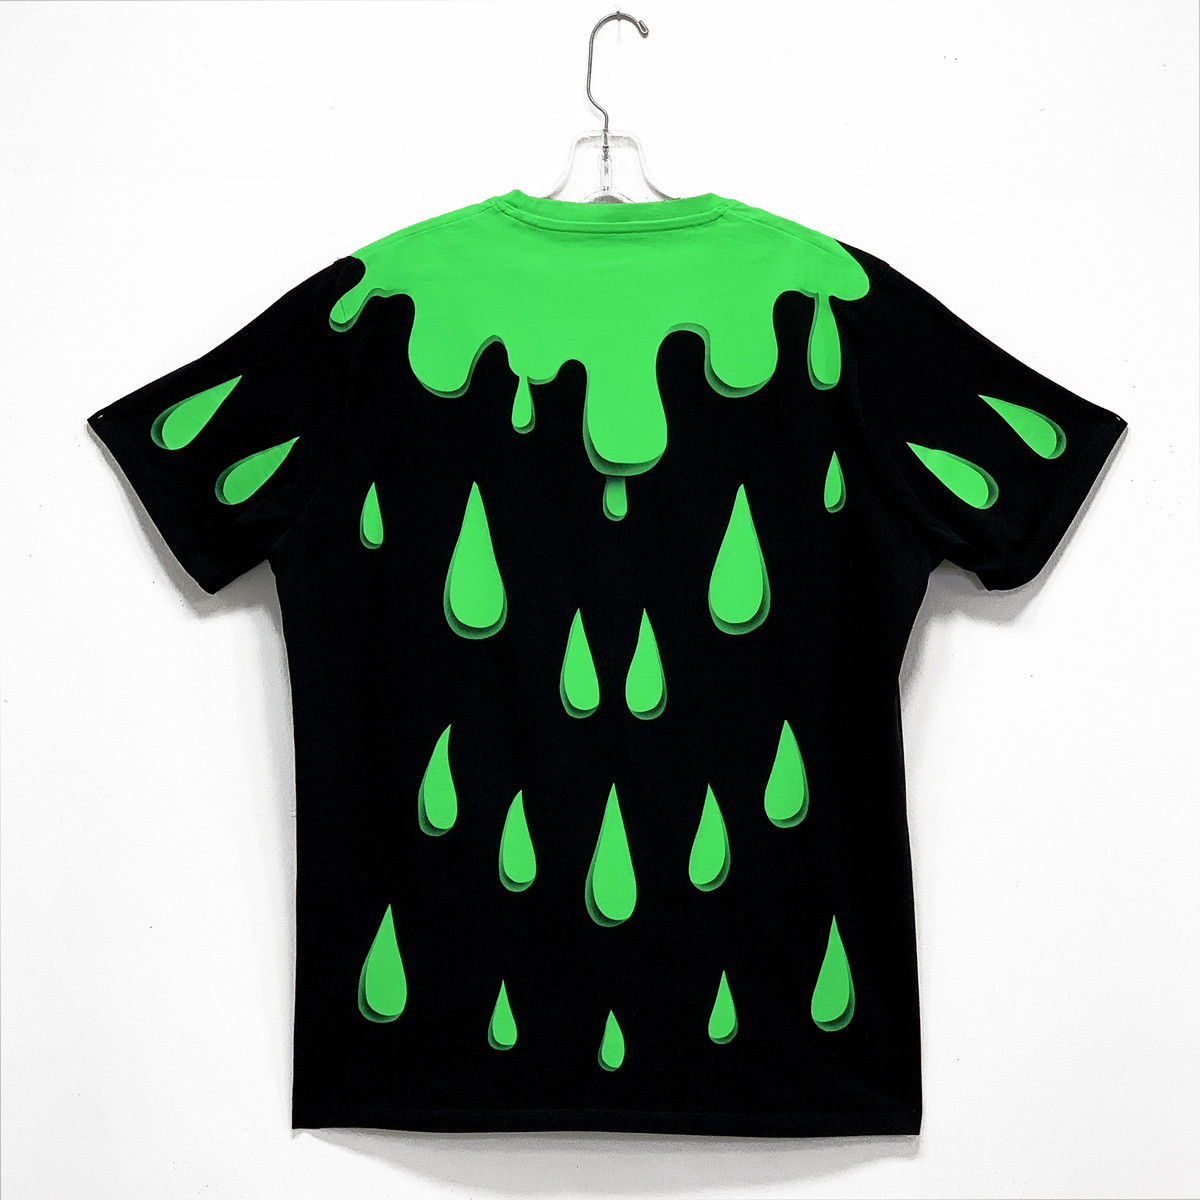 Billie Eilish anime shirt, green! From hot... - Depop